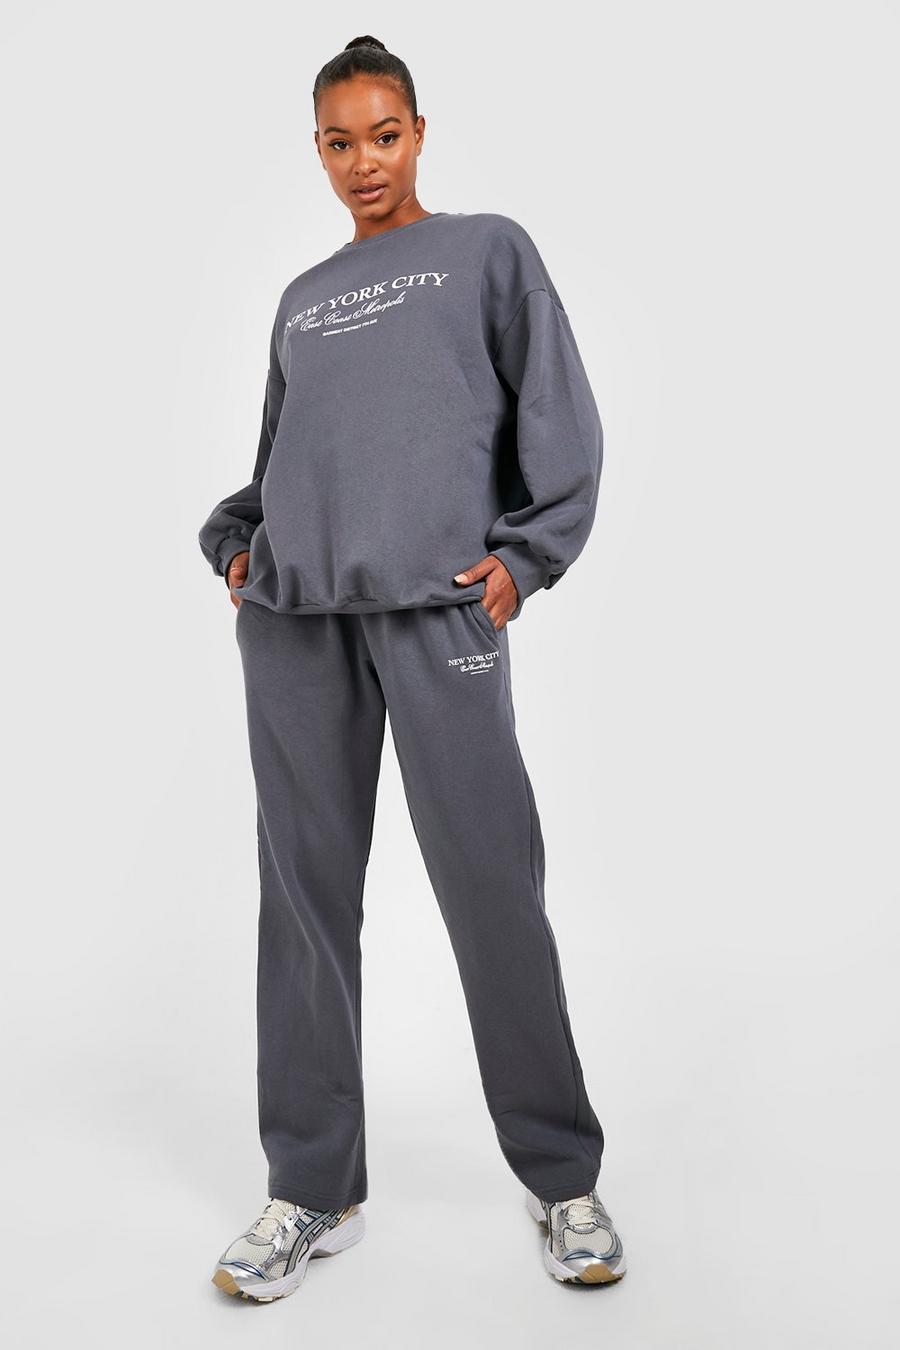 Charcoal gris Tall New York Printed Sweatshirt Tracksuit